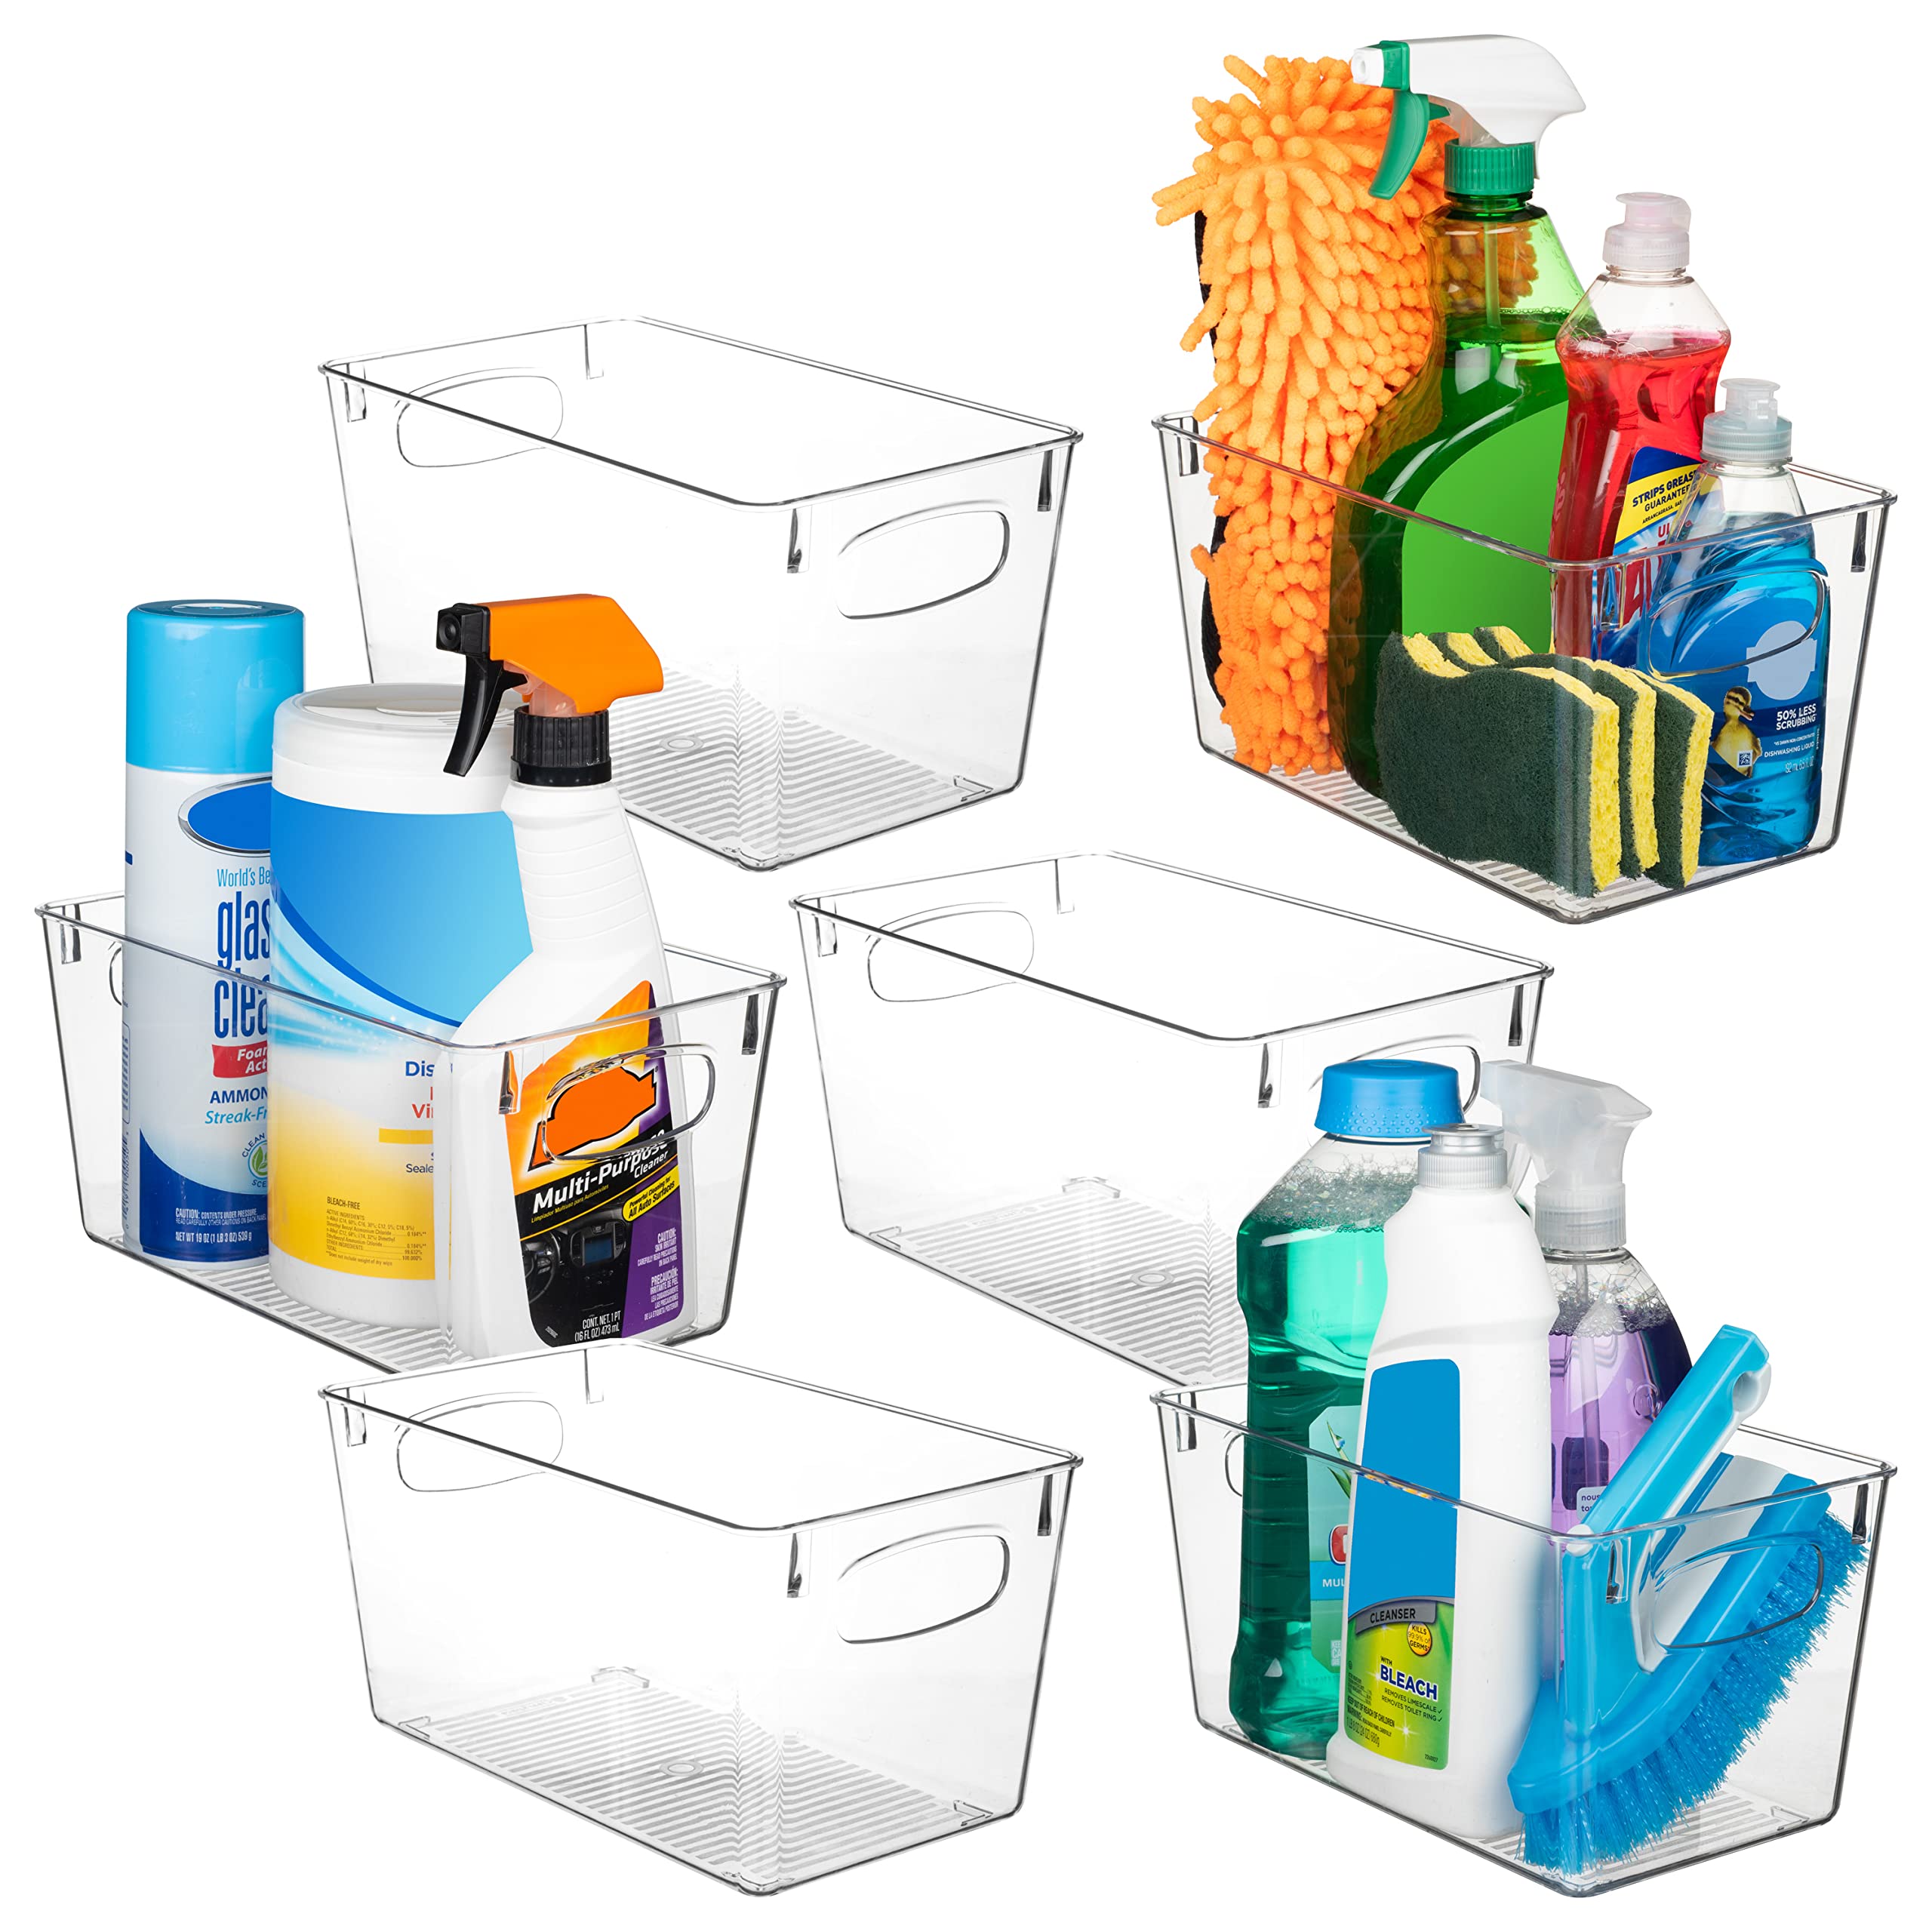 ClearSpace Plastic Bins  Perfect Kitchen Organization or Pantry Storage  Fridge Organizer, Cabinet Organizers 6 Pack